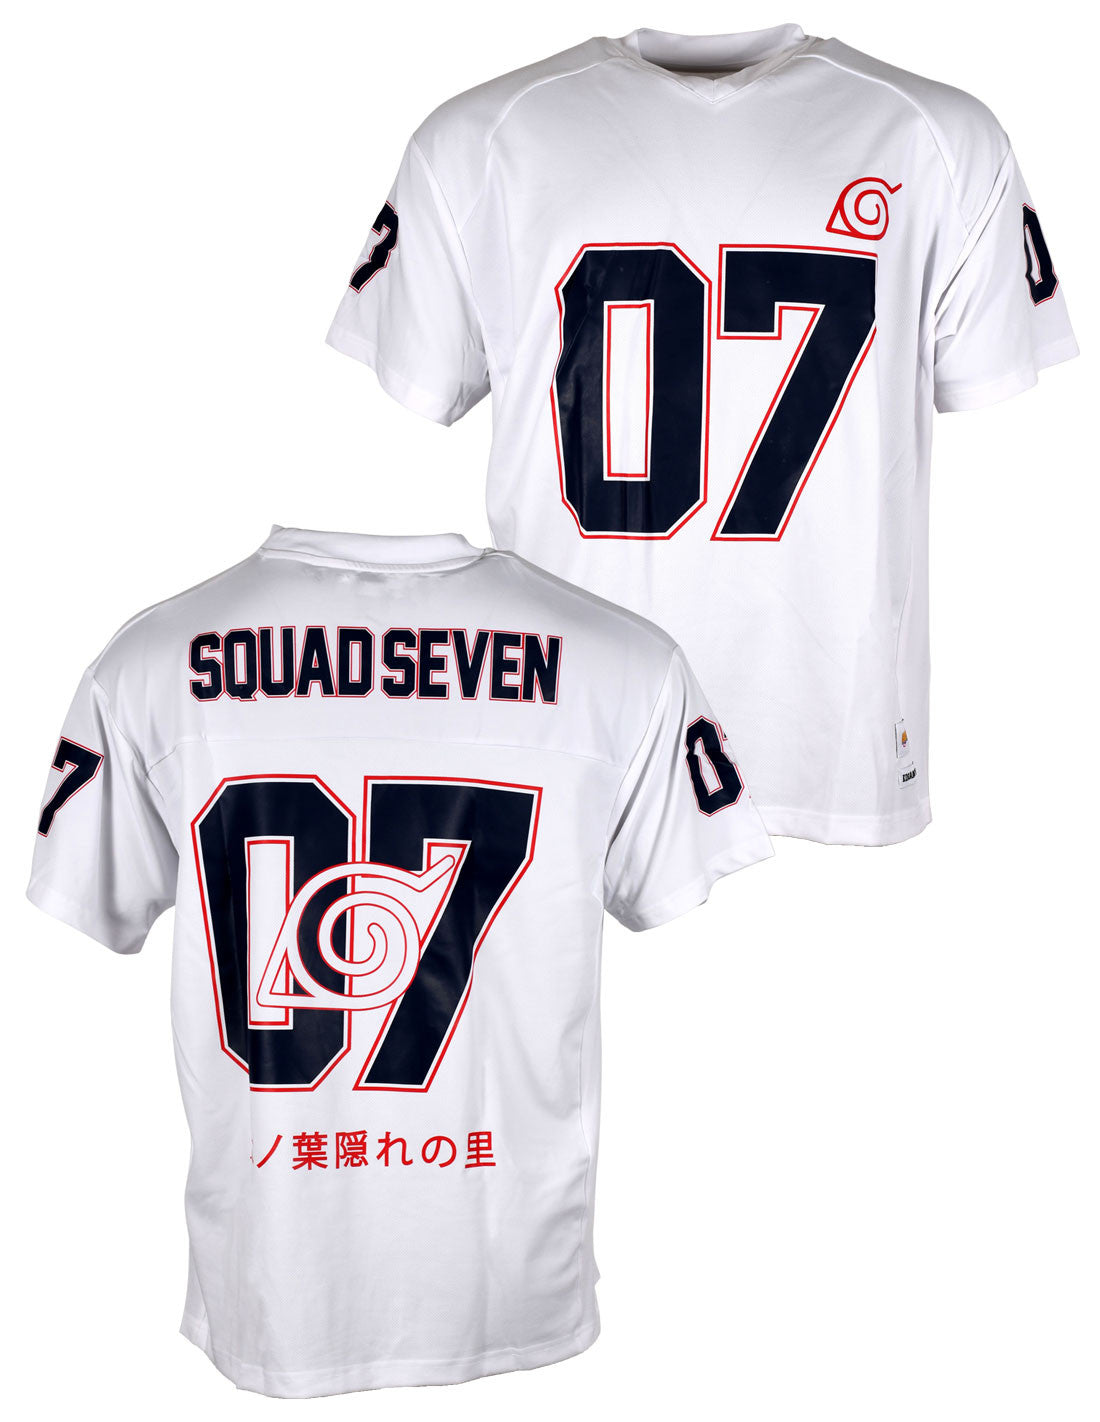 Naruto Sports Tee - Squad Seven 07